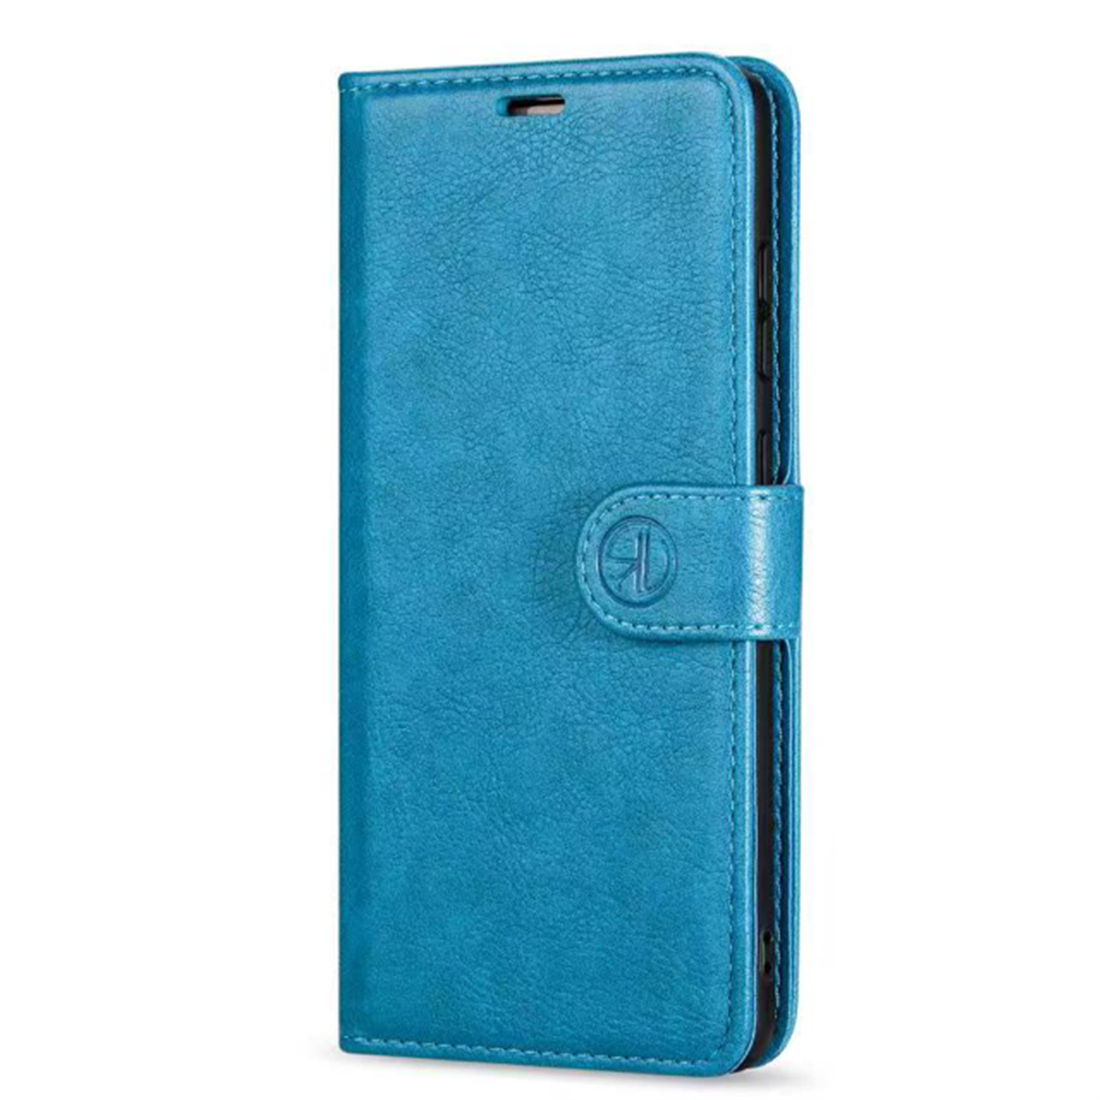 Apple iPhone XR artificial leather Light Blue Book Case